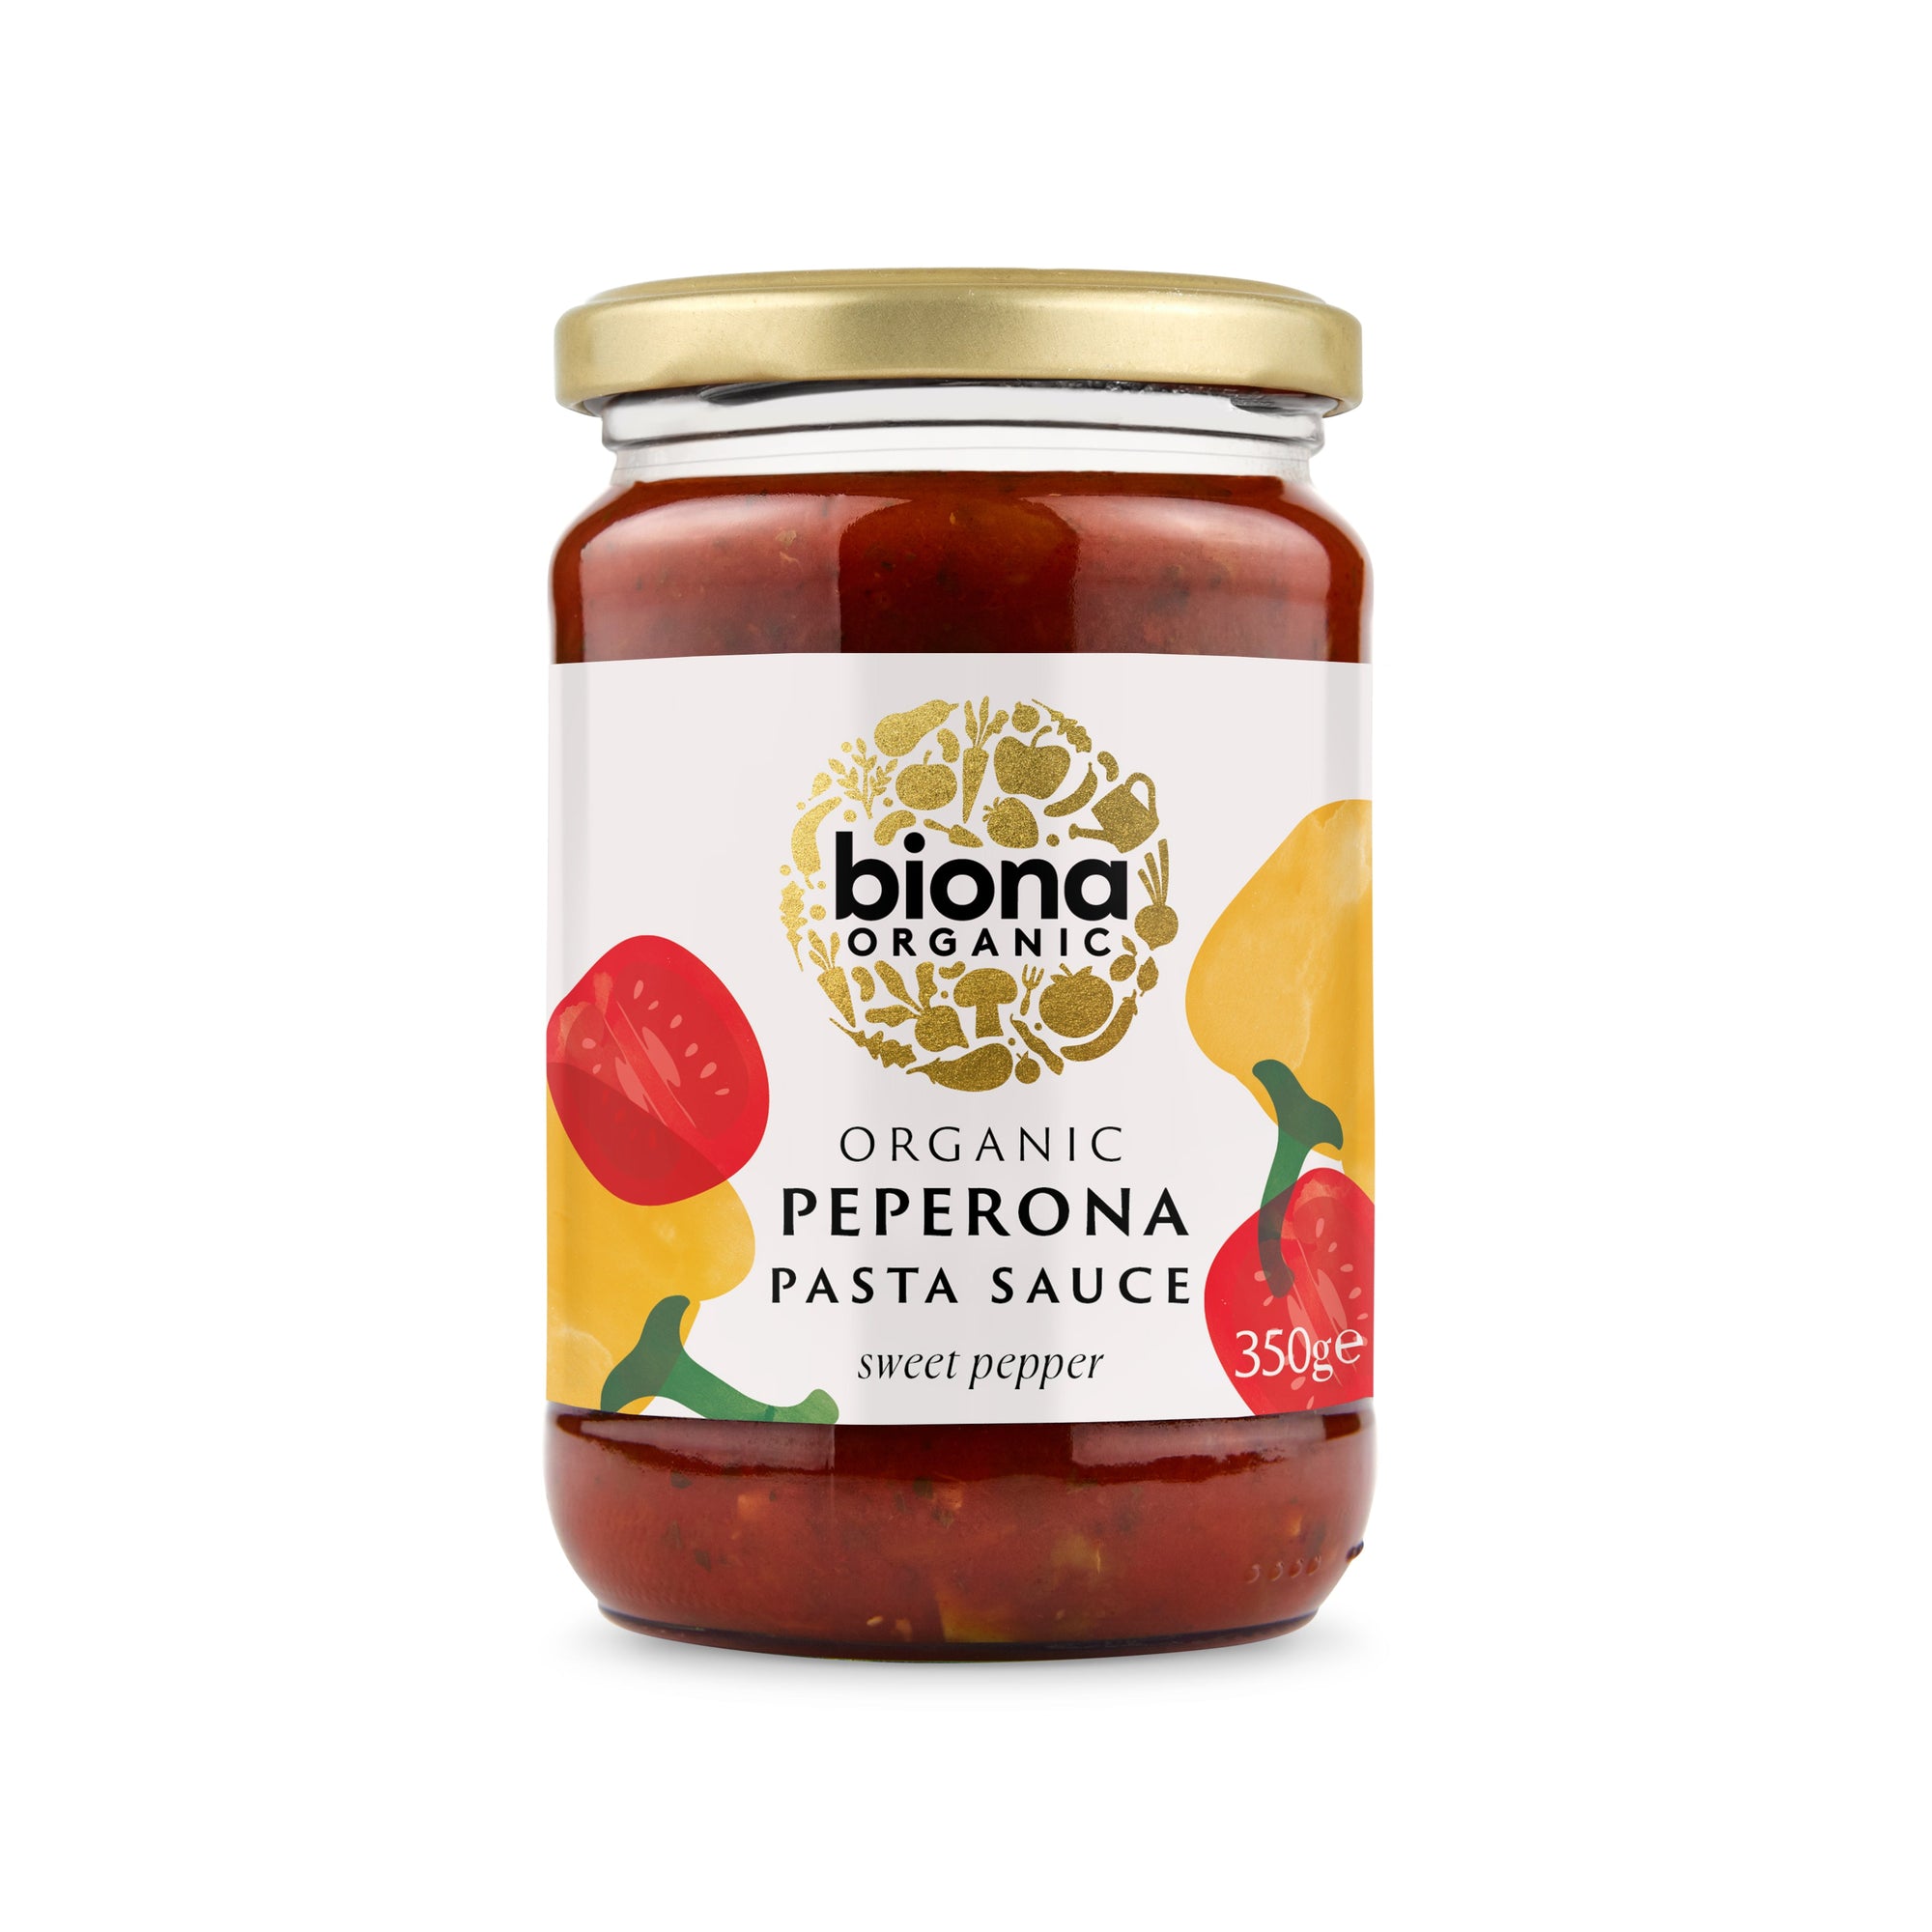 Biona Organic Peperona Pasta Sauce (350g)